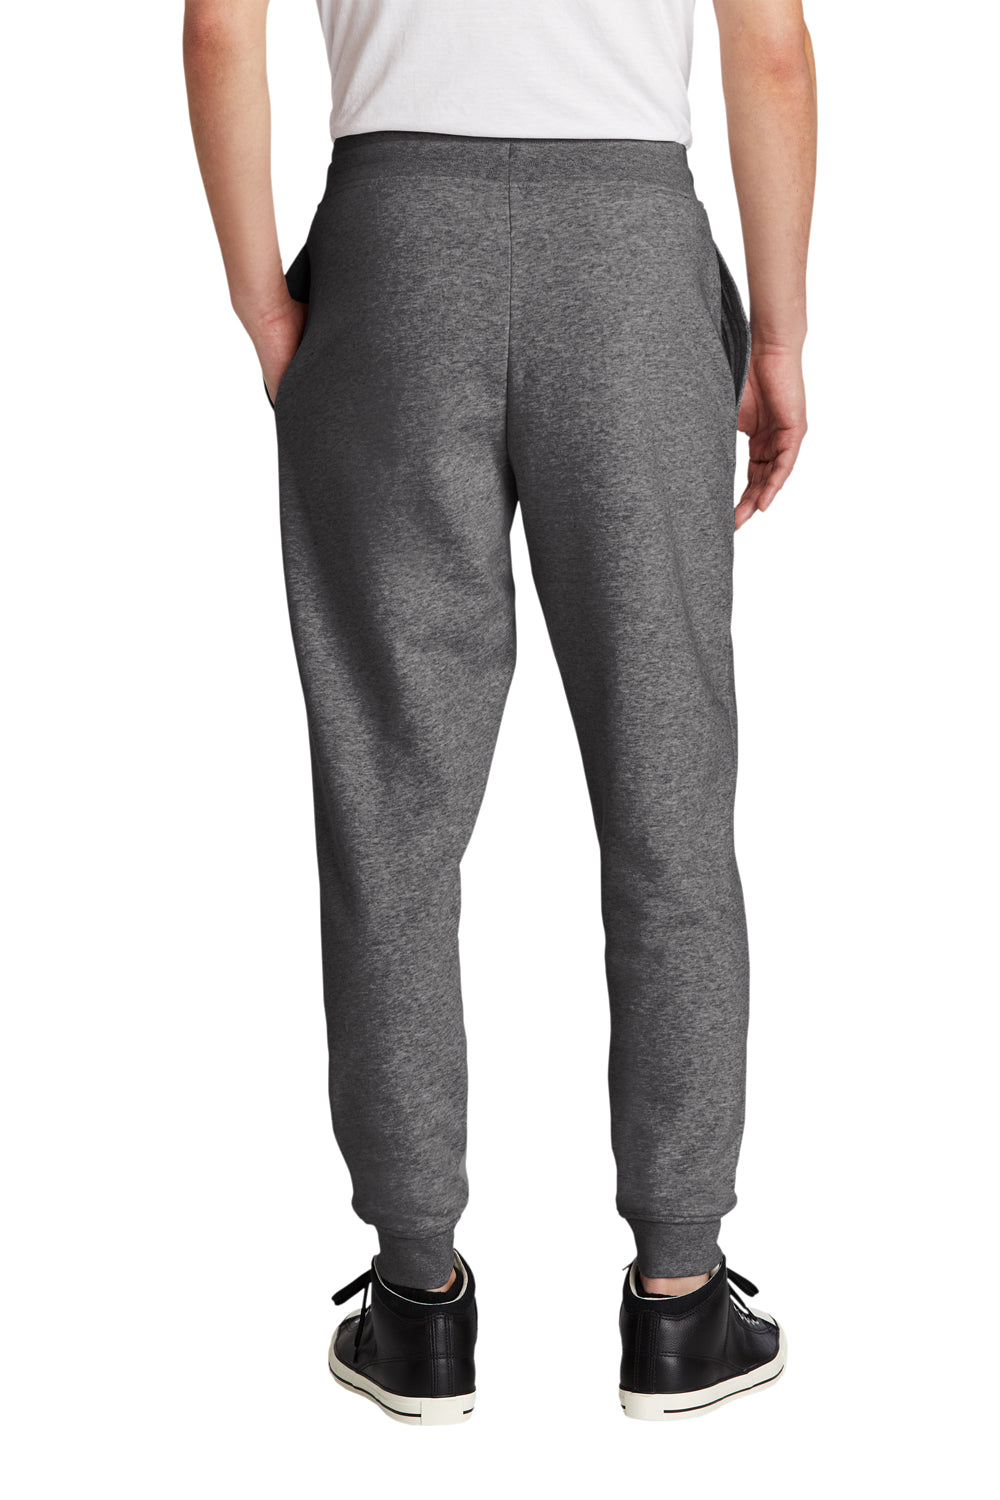 District DT6107 V.I.T. Fleece Jogger Sweatpants w/ Pockets Heathered Charcoal Grey Back